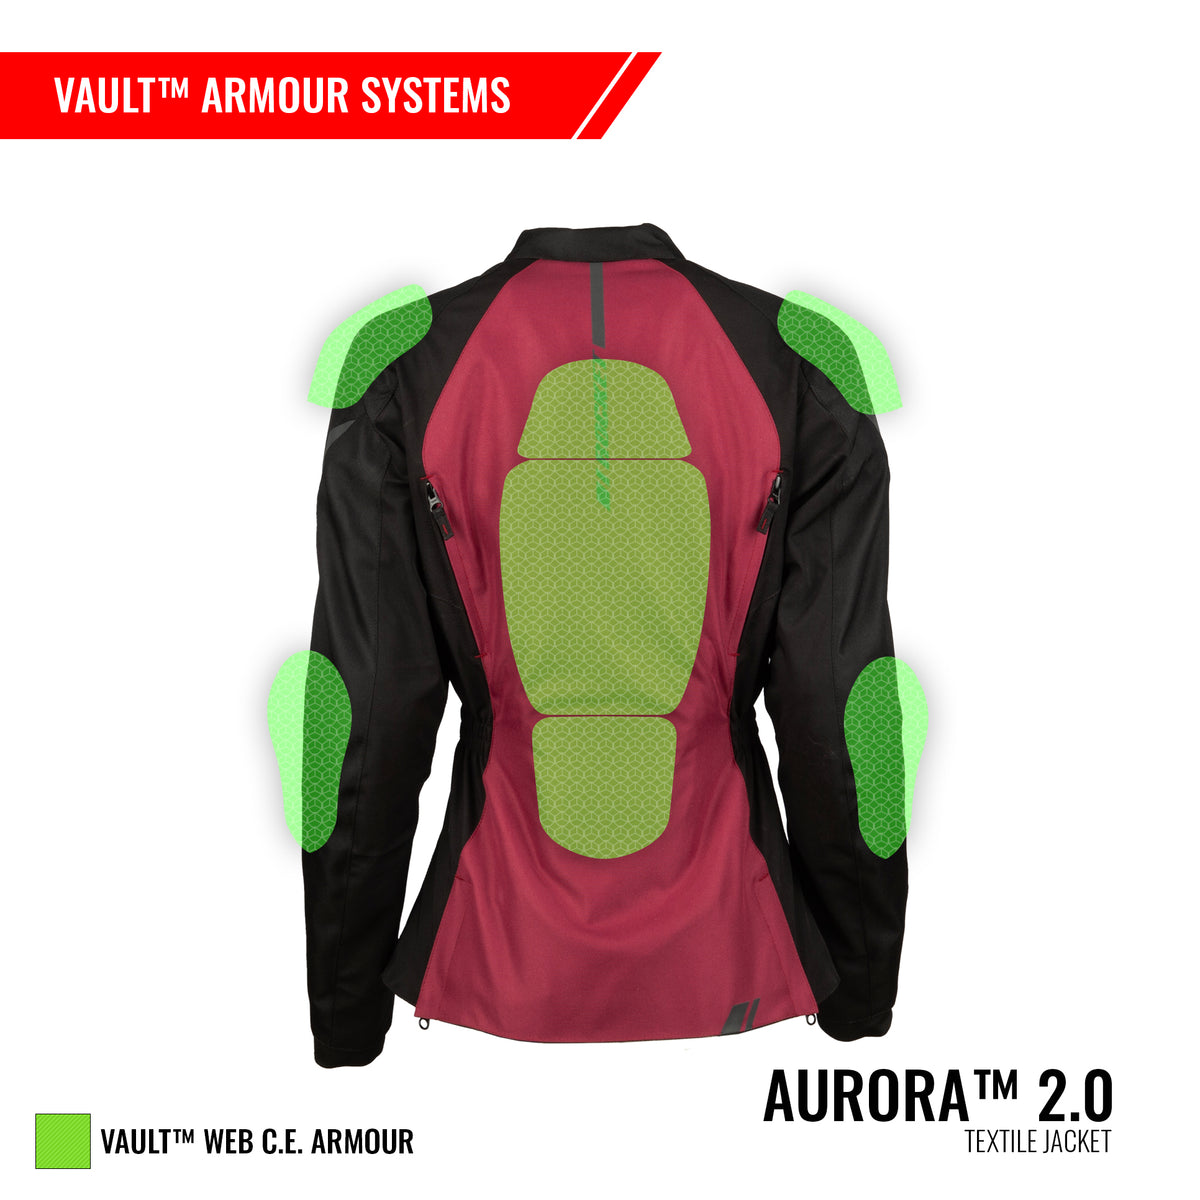 Aurora™ 2.0 Textile Jacket